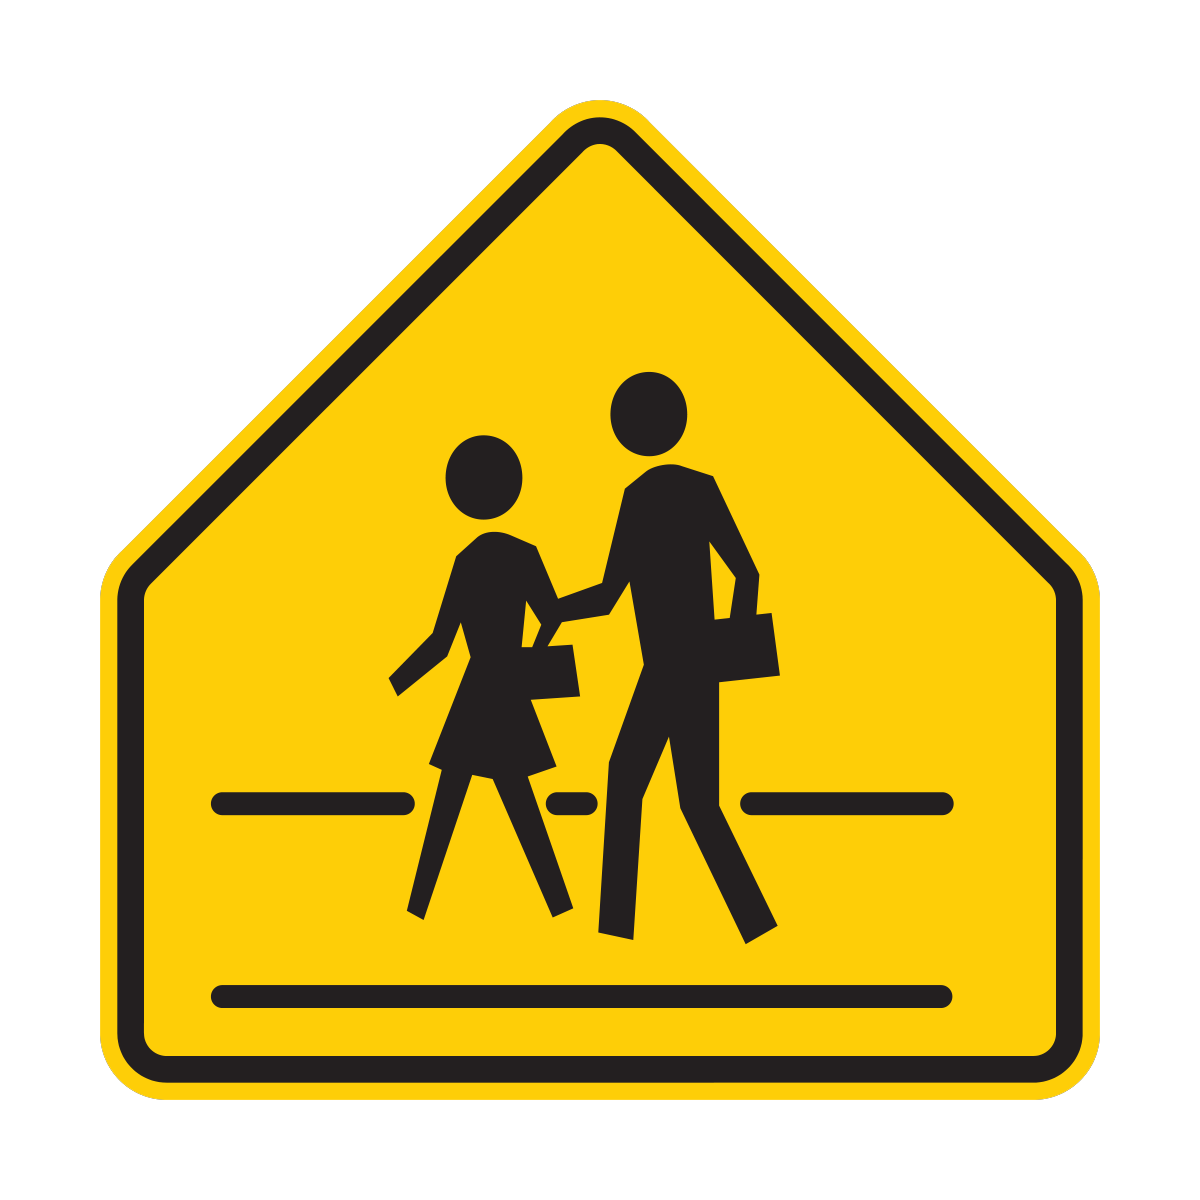 School Zone Symbol Sign (S2-1)